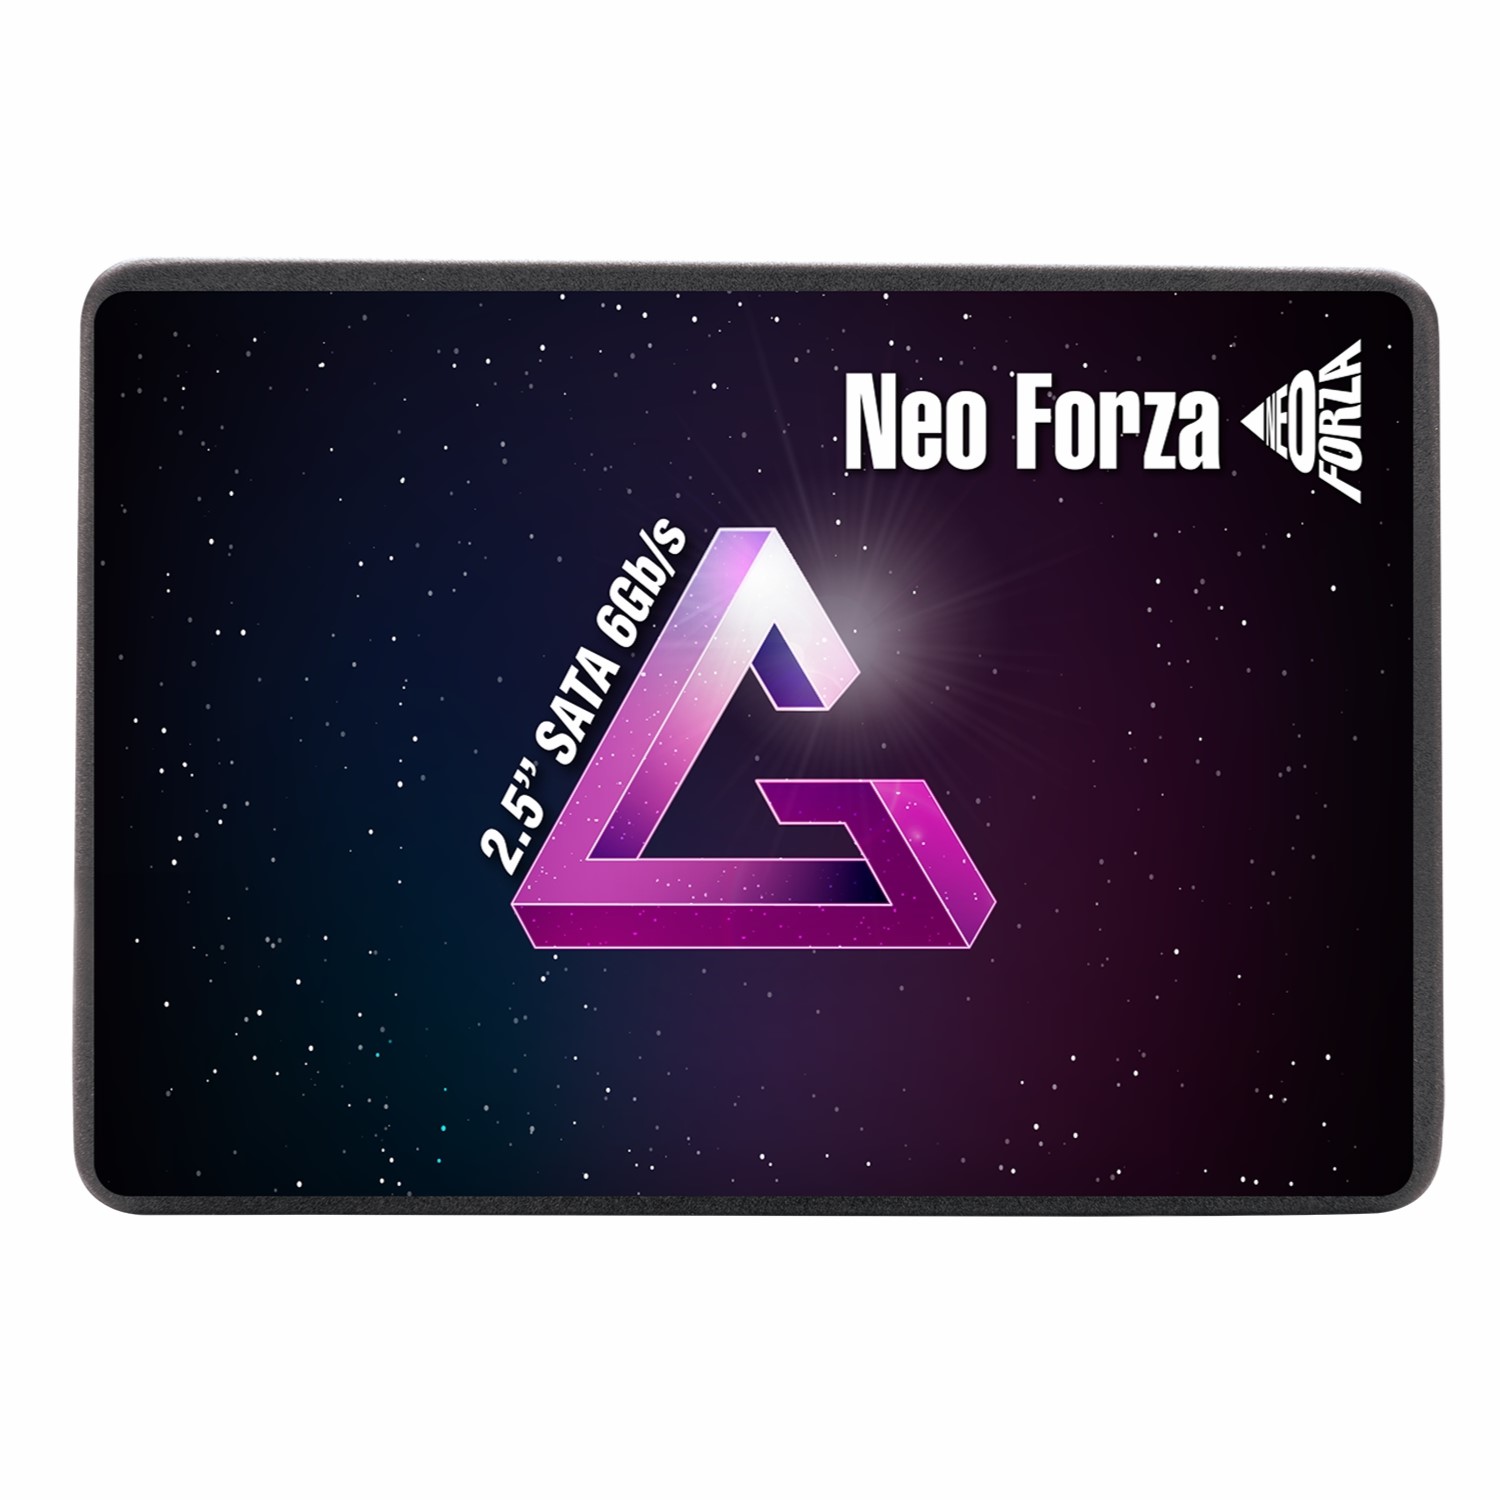 حافظه اس اس دی Neo Forza NFS12 240GB